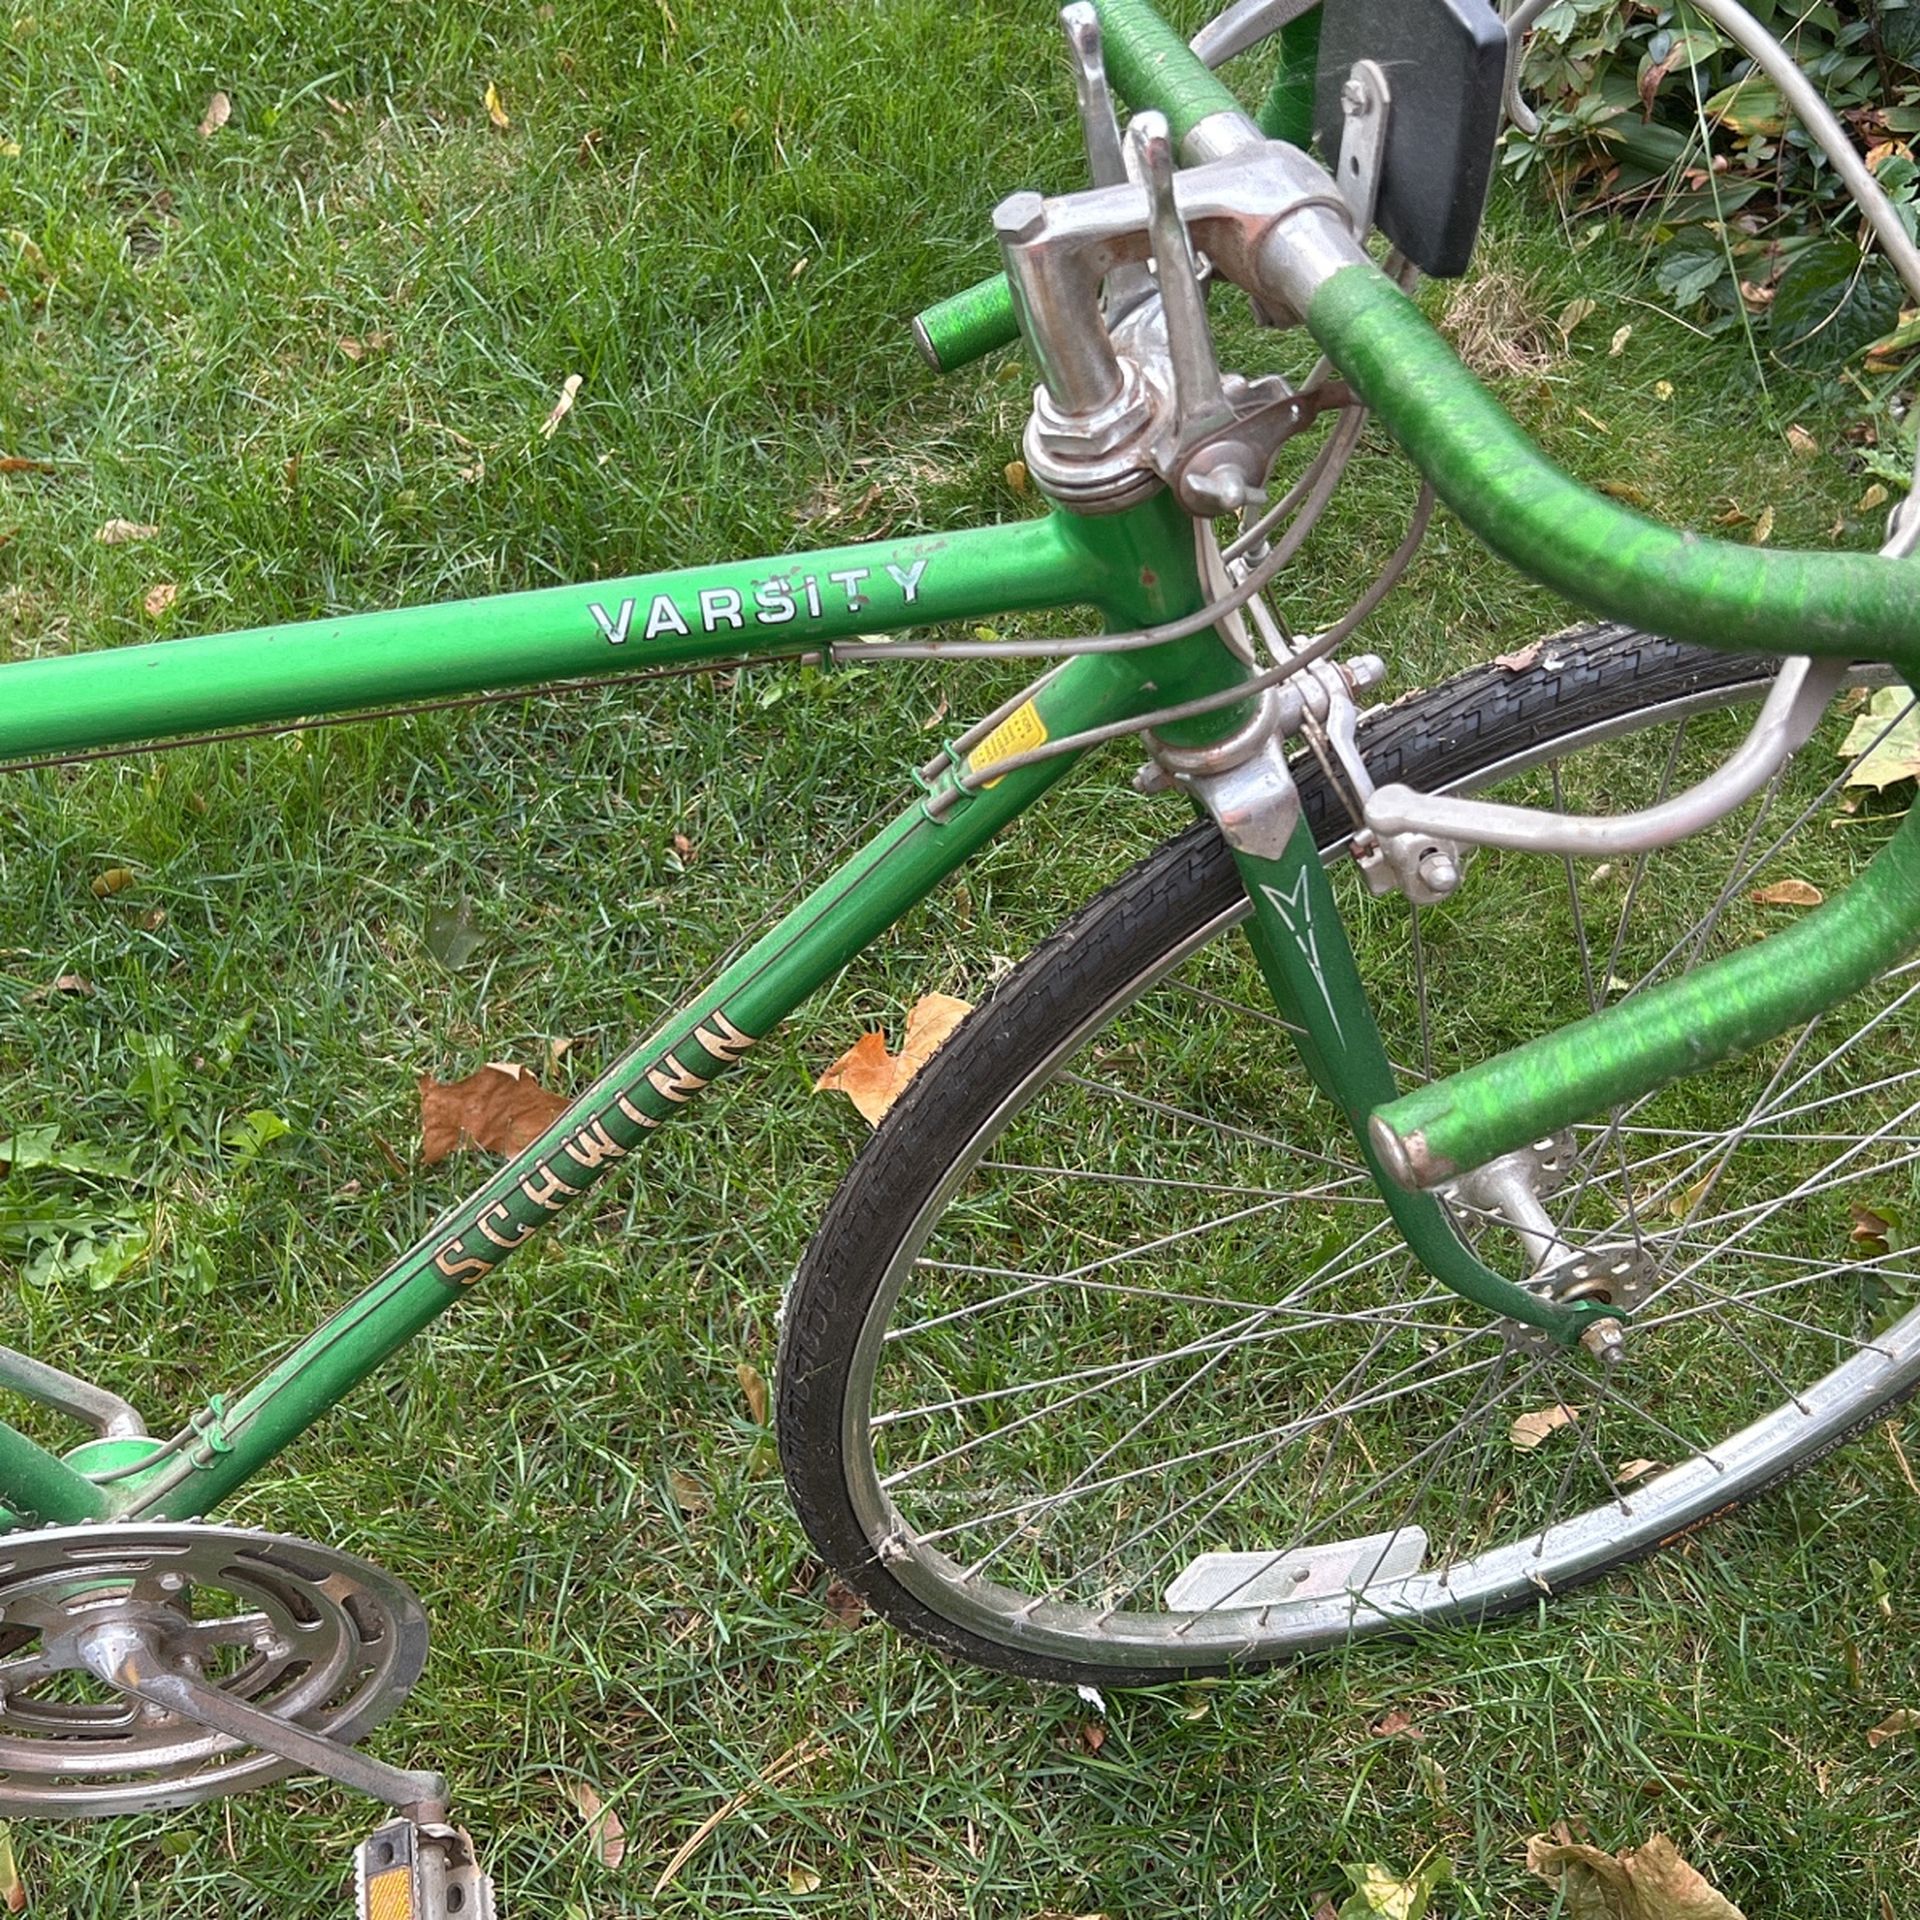 Schwinn Varsity Vintage bike